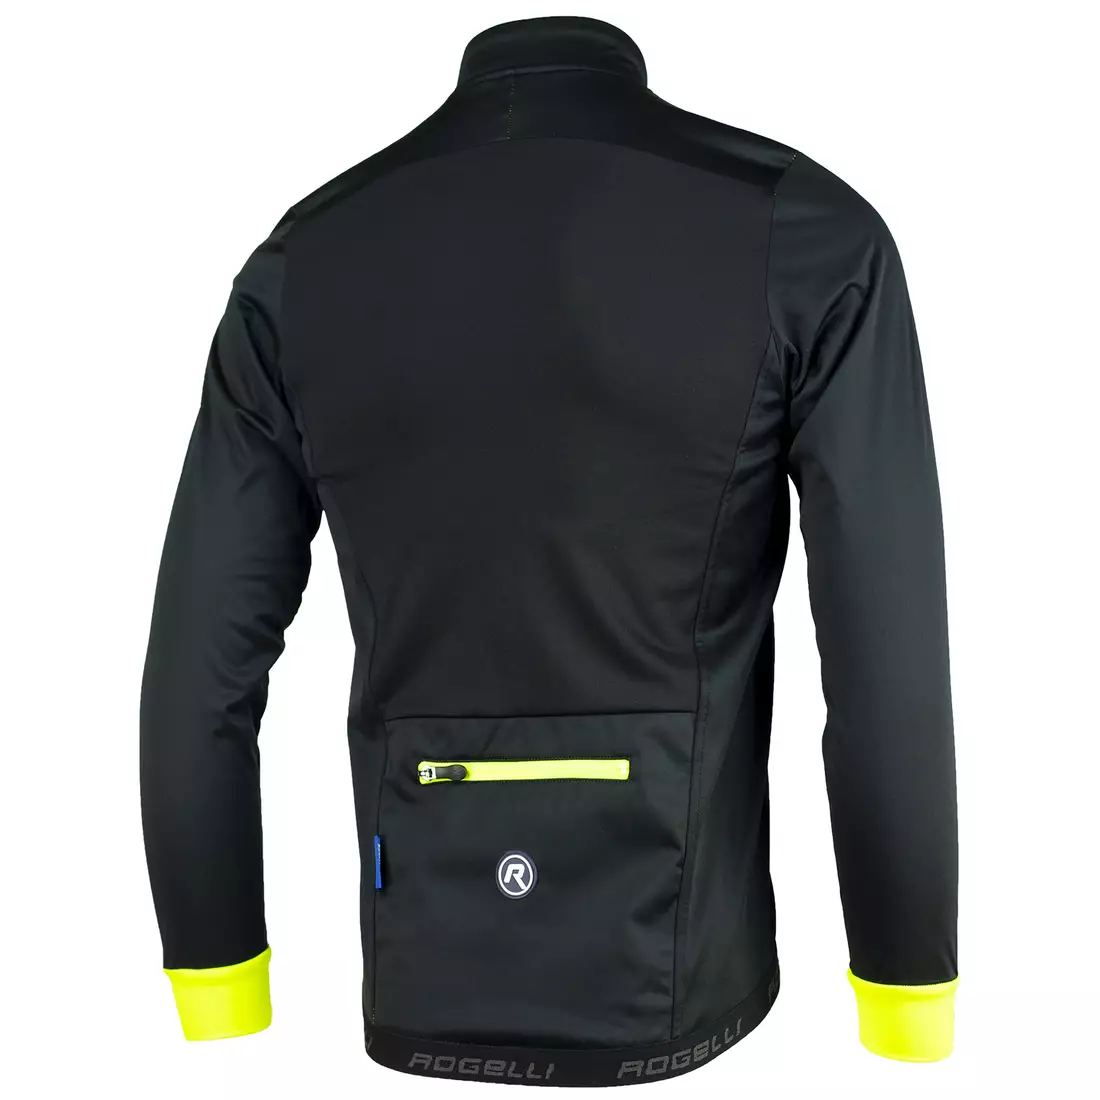 ROGELLI PESARO 2.0 zimní cyklistická bunda, černo-fluor